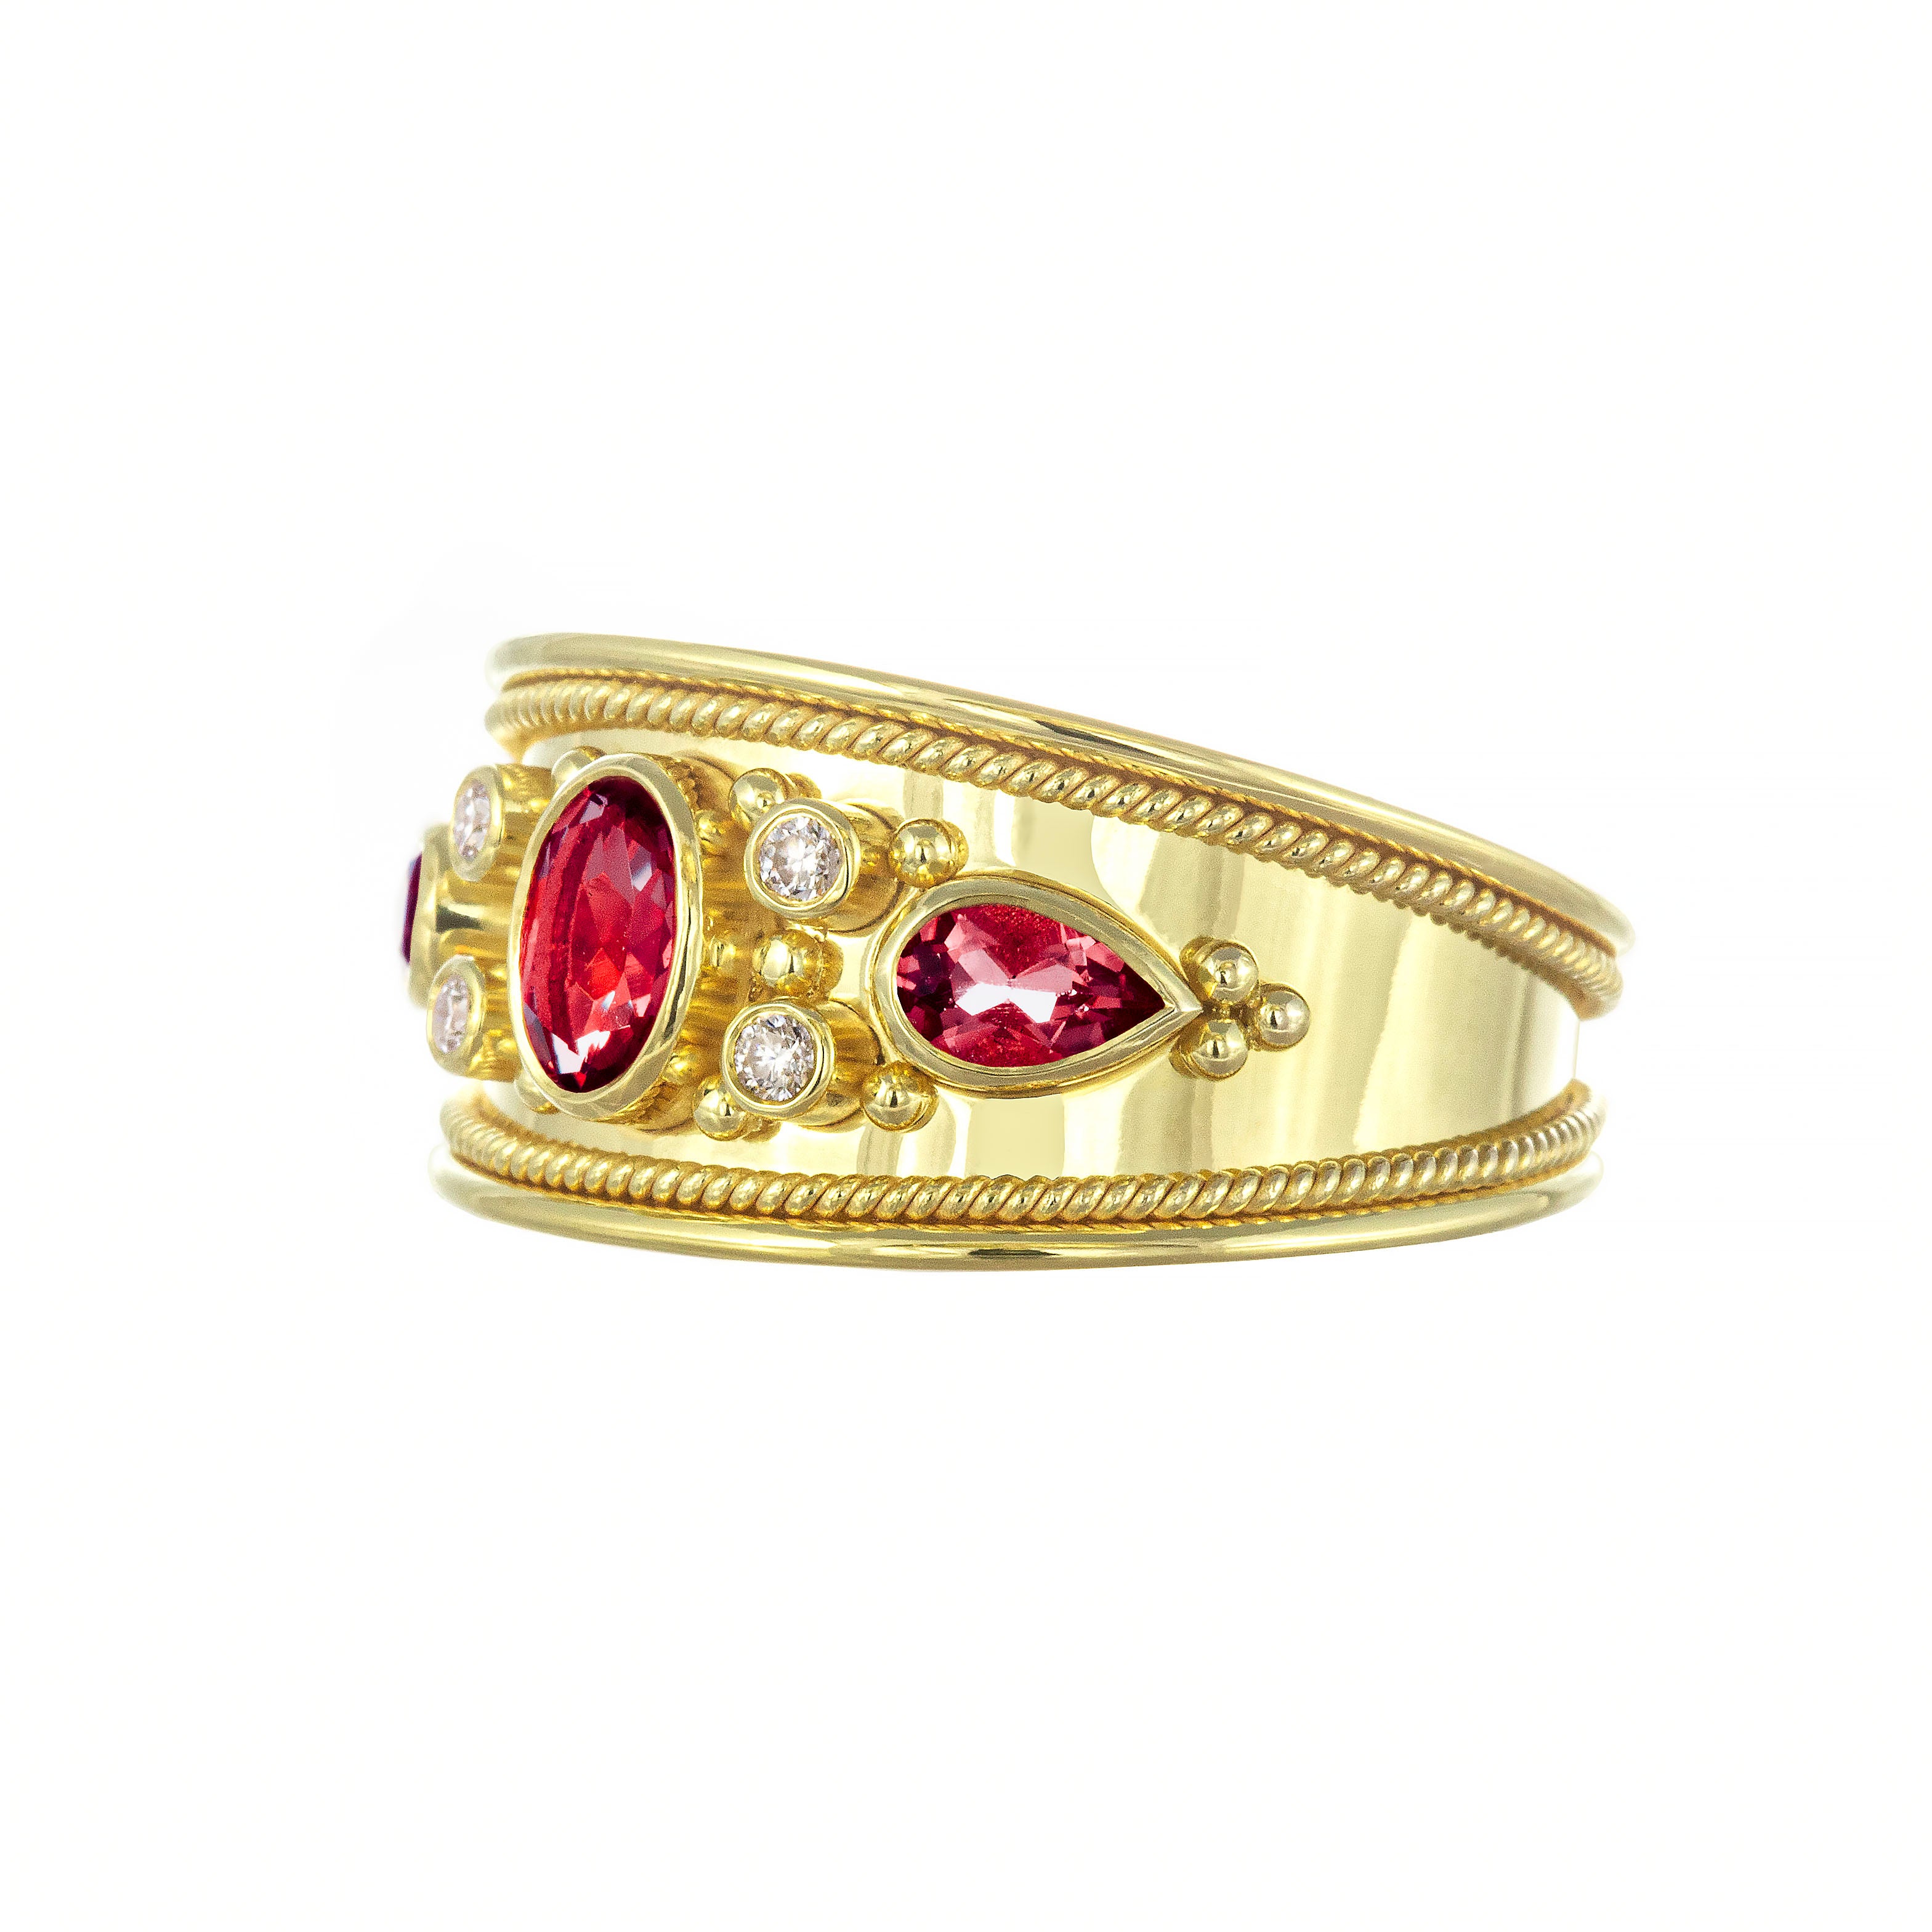 Byzantine Gold Ring with Rubies Diamonds and a Shiny Finish Odysseus Jewelry